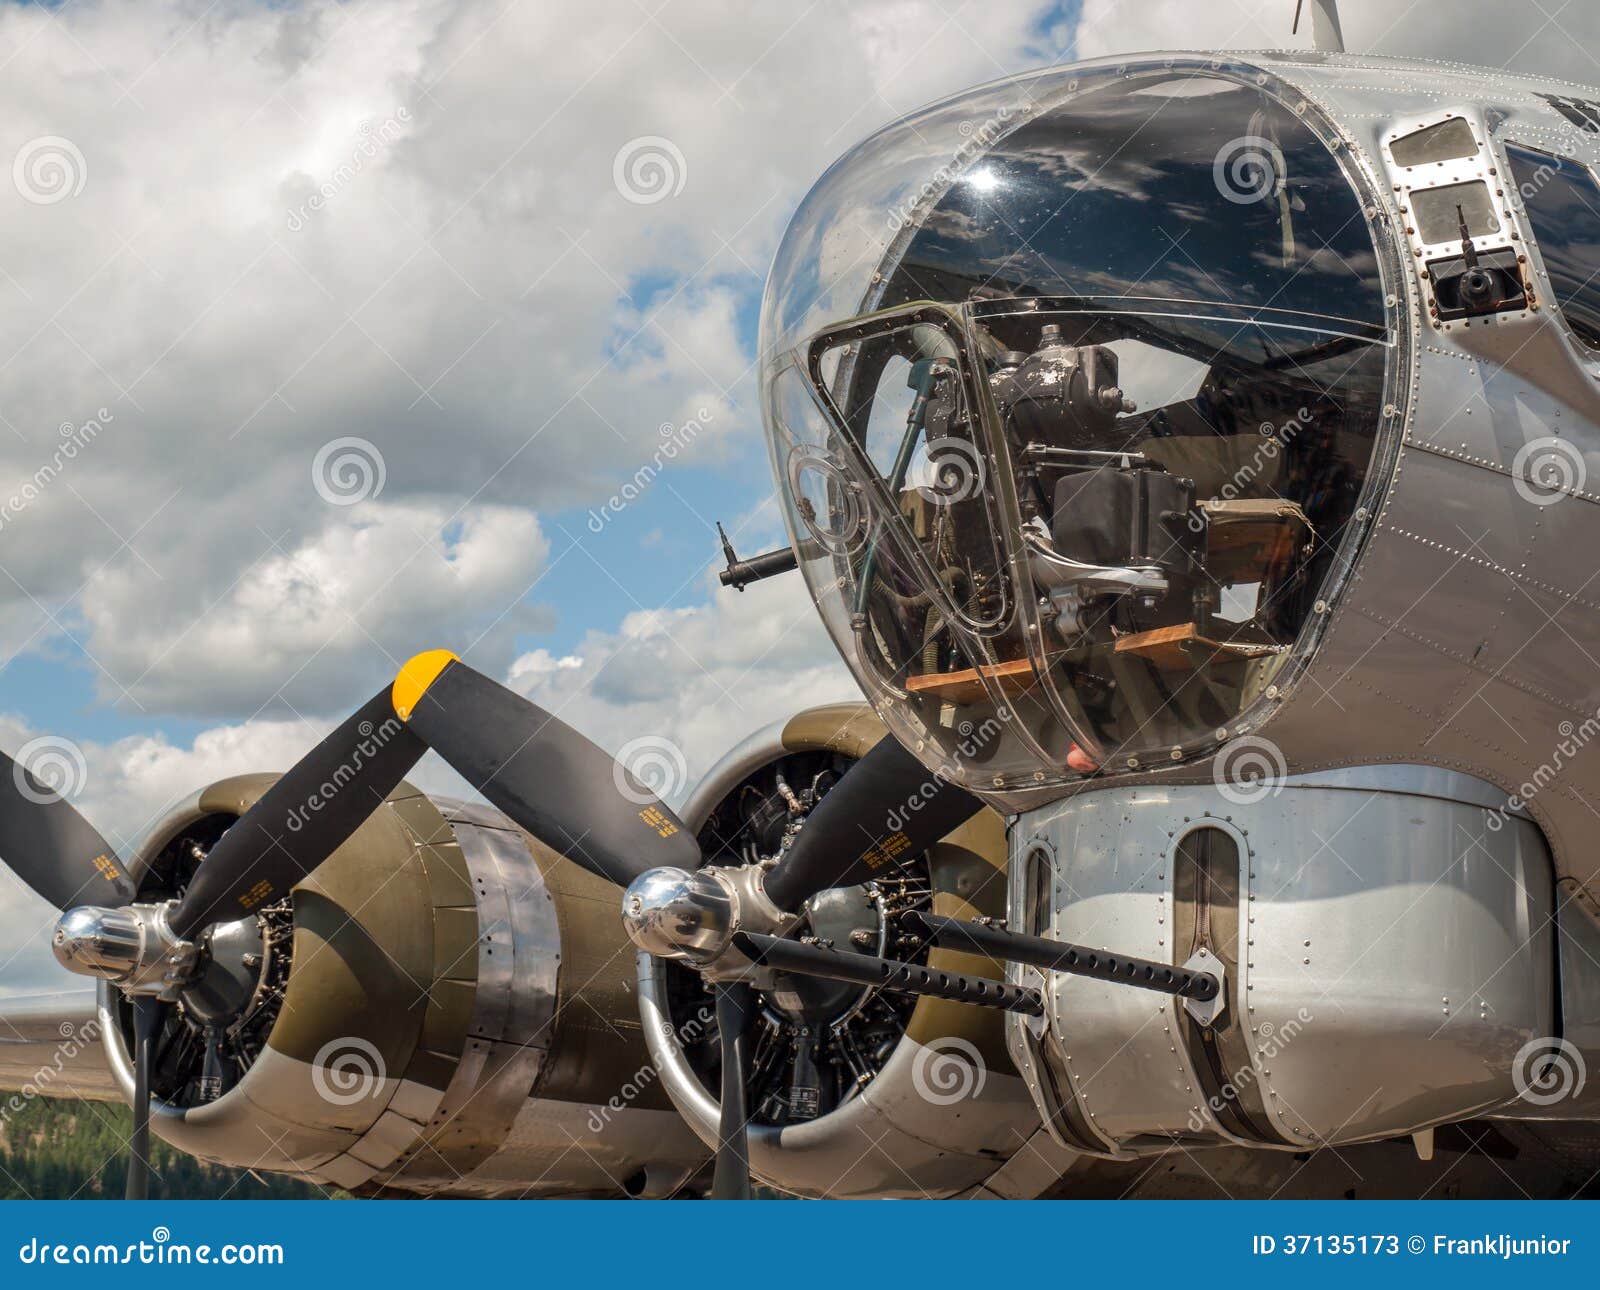 world war ii b17 bomber's propellers and guns